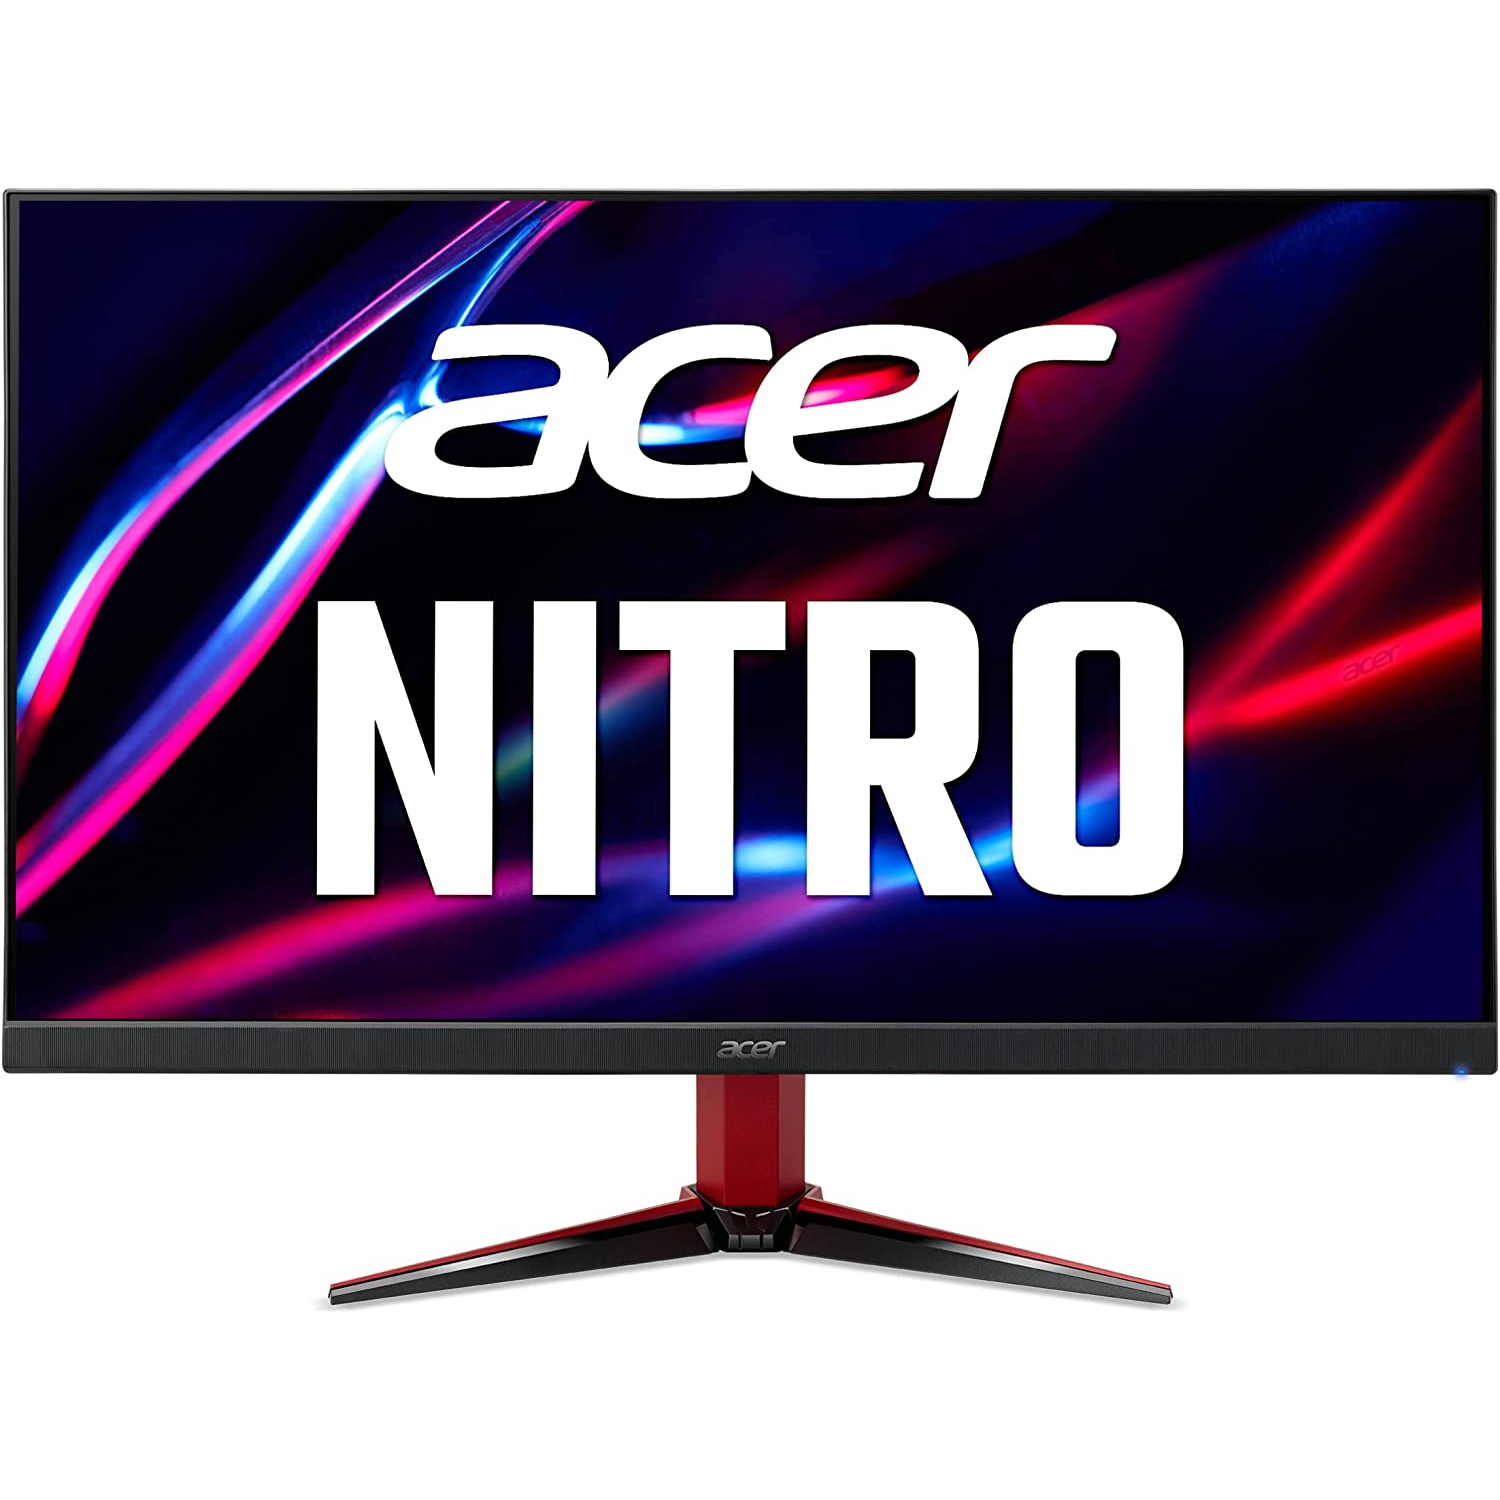 Acer Nitro VG272 Lvbmiipx 27” Full HD (1920 x 1080) IPS Gaming Monitor ,NVIDIA G-SYNC Compatible ,165Hz ,HDR400 ,DCI-P3 90% ,1 x Display Port 1.2 & 2 x HDMI 2.0